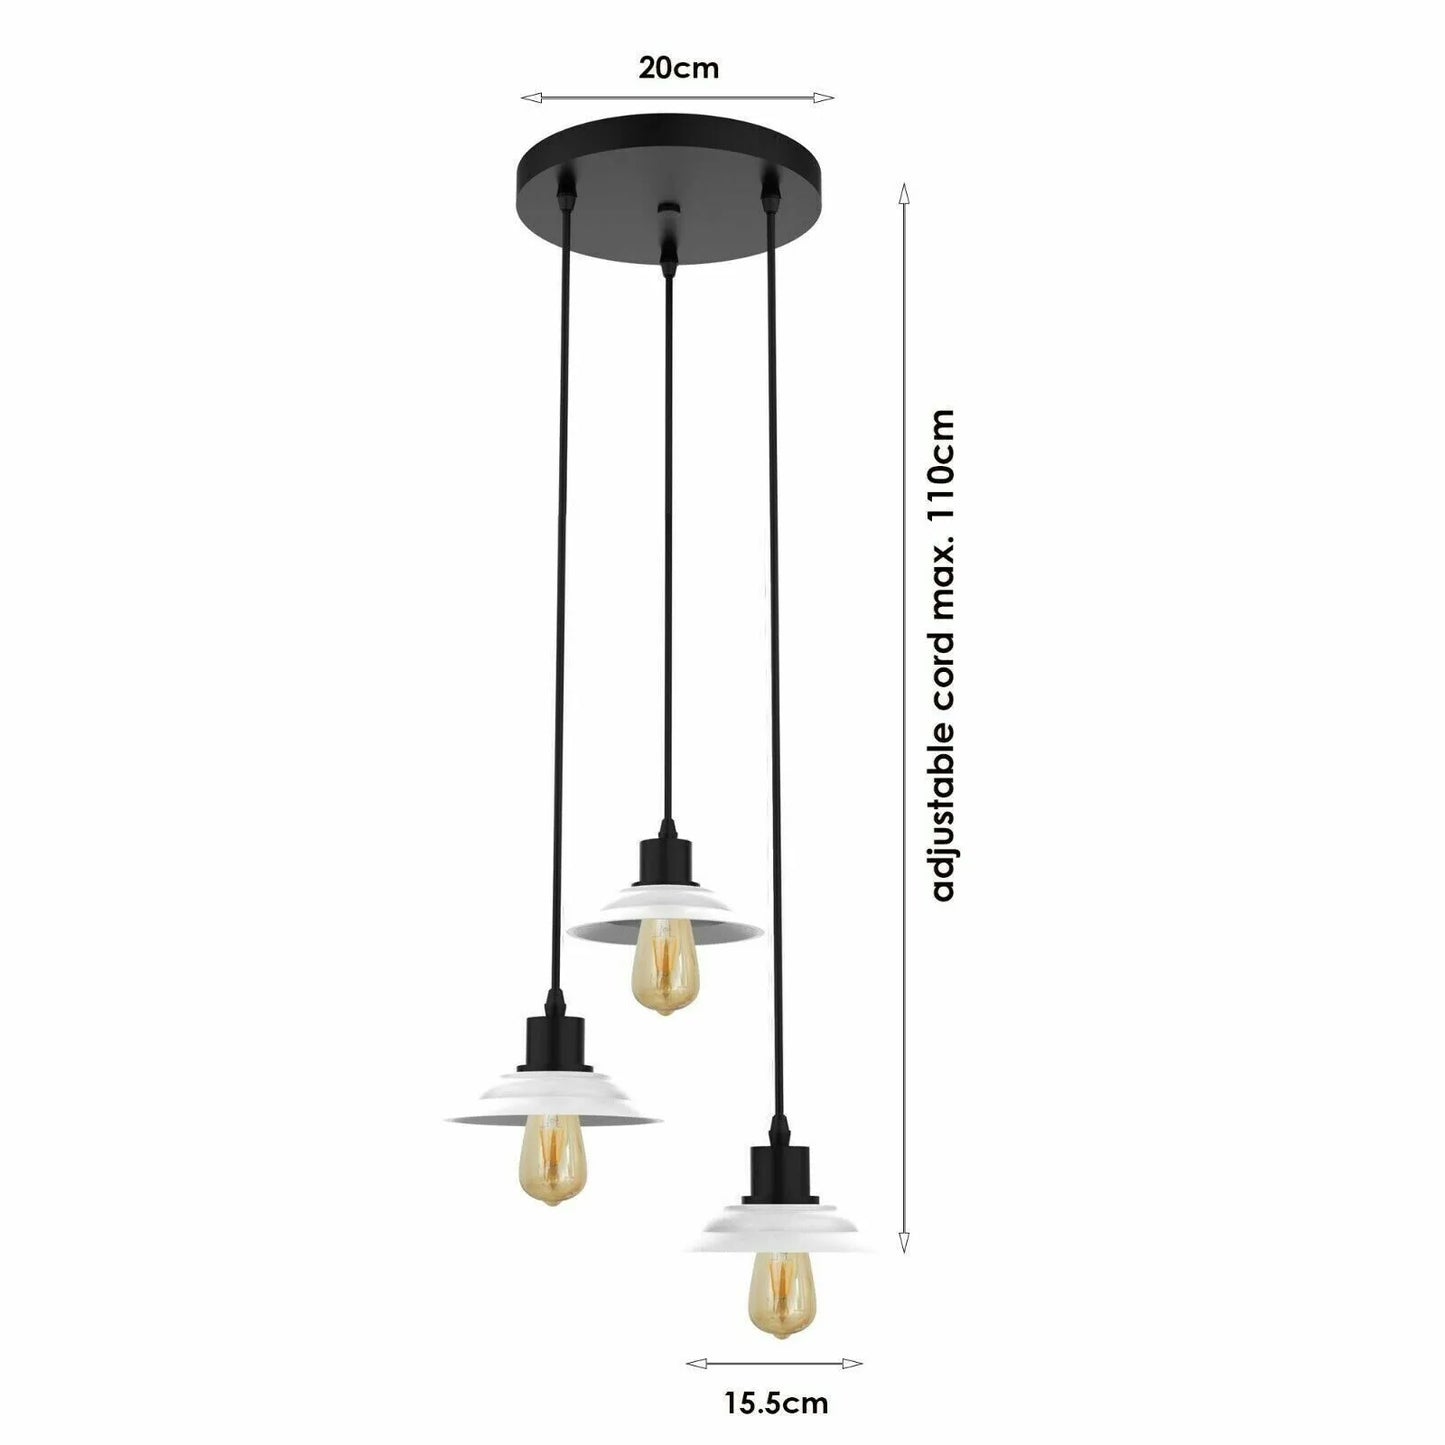  Ceramic Lamp Shade Ceiling hanging Pendant Light Fixture-Size image